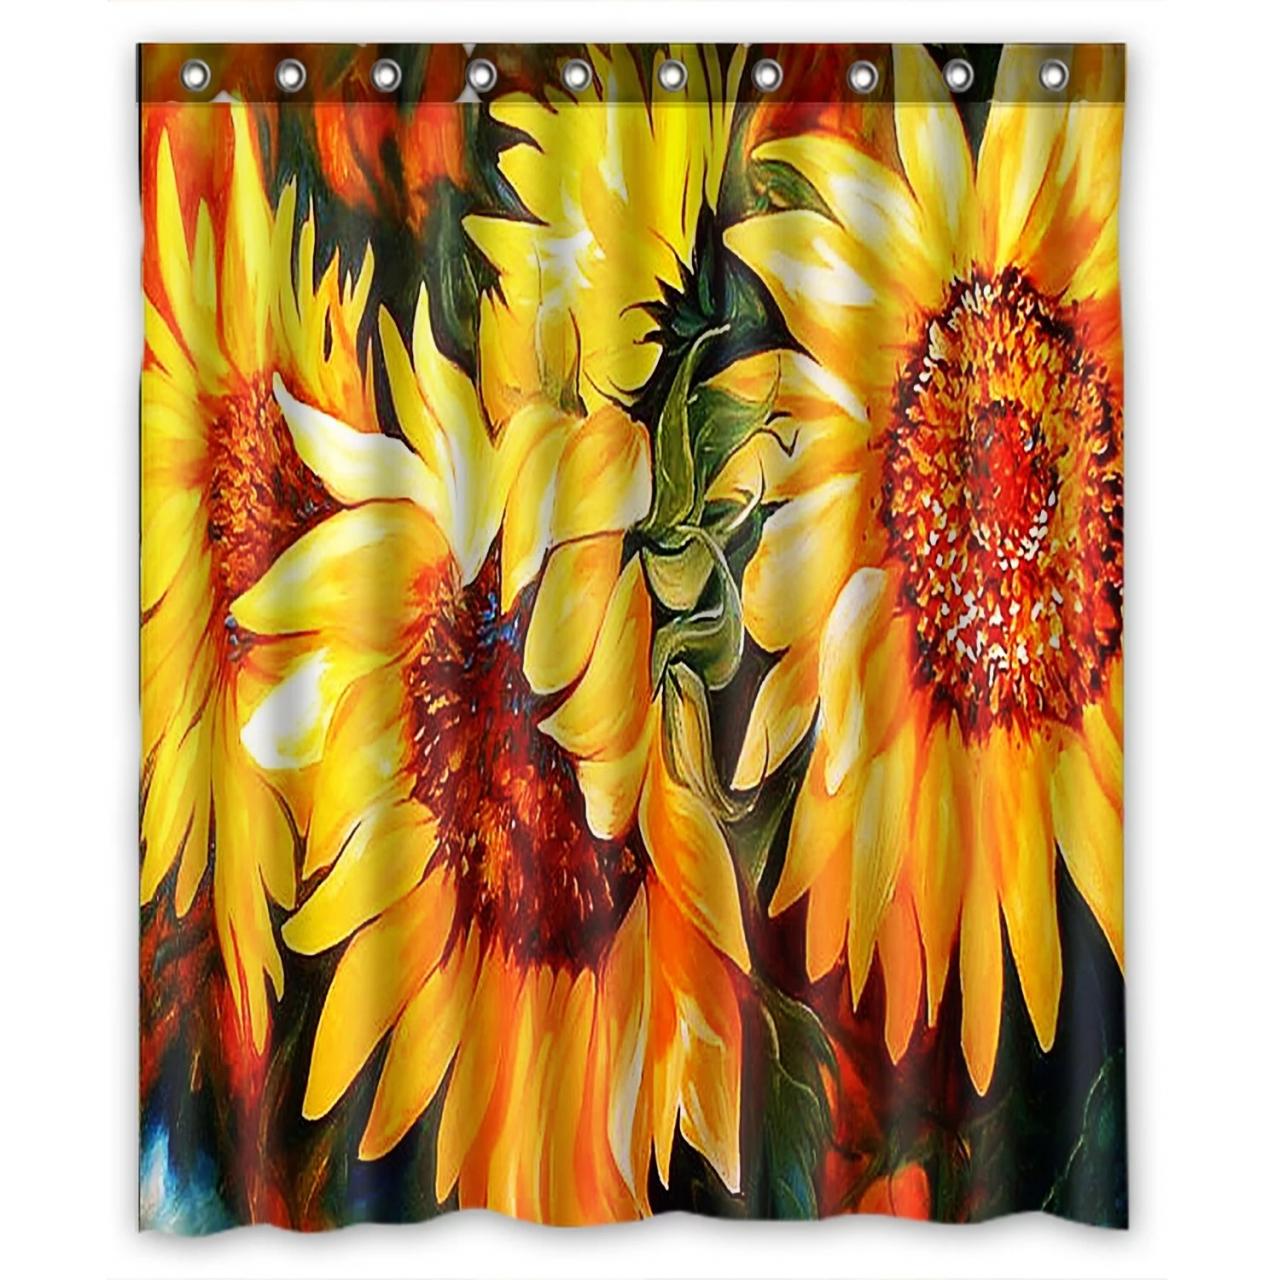 ZKGK Sunflowers Waterproof Shower Curtain Bathroom Decor Sets with